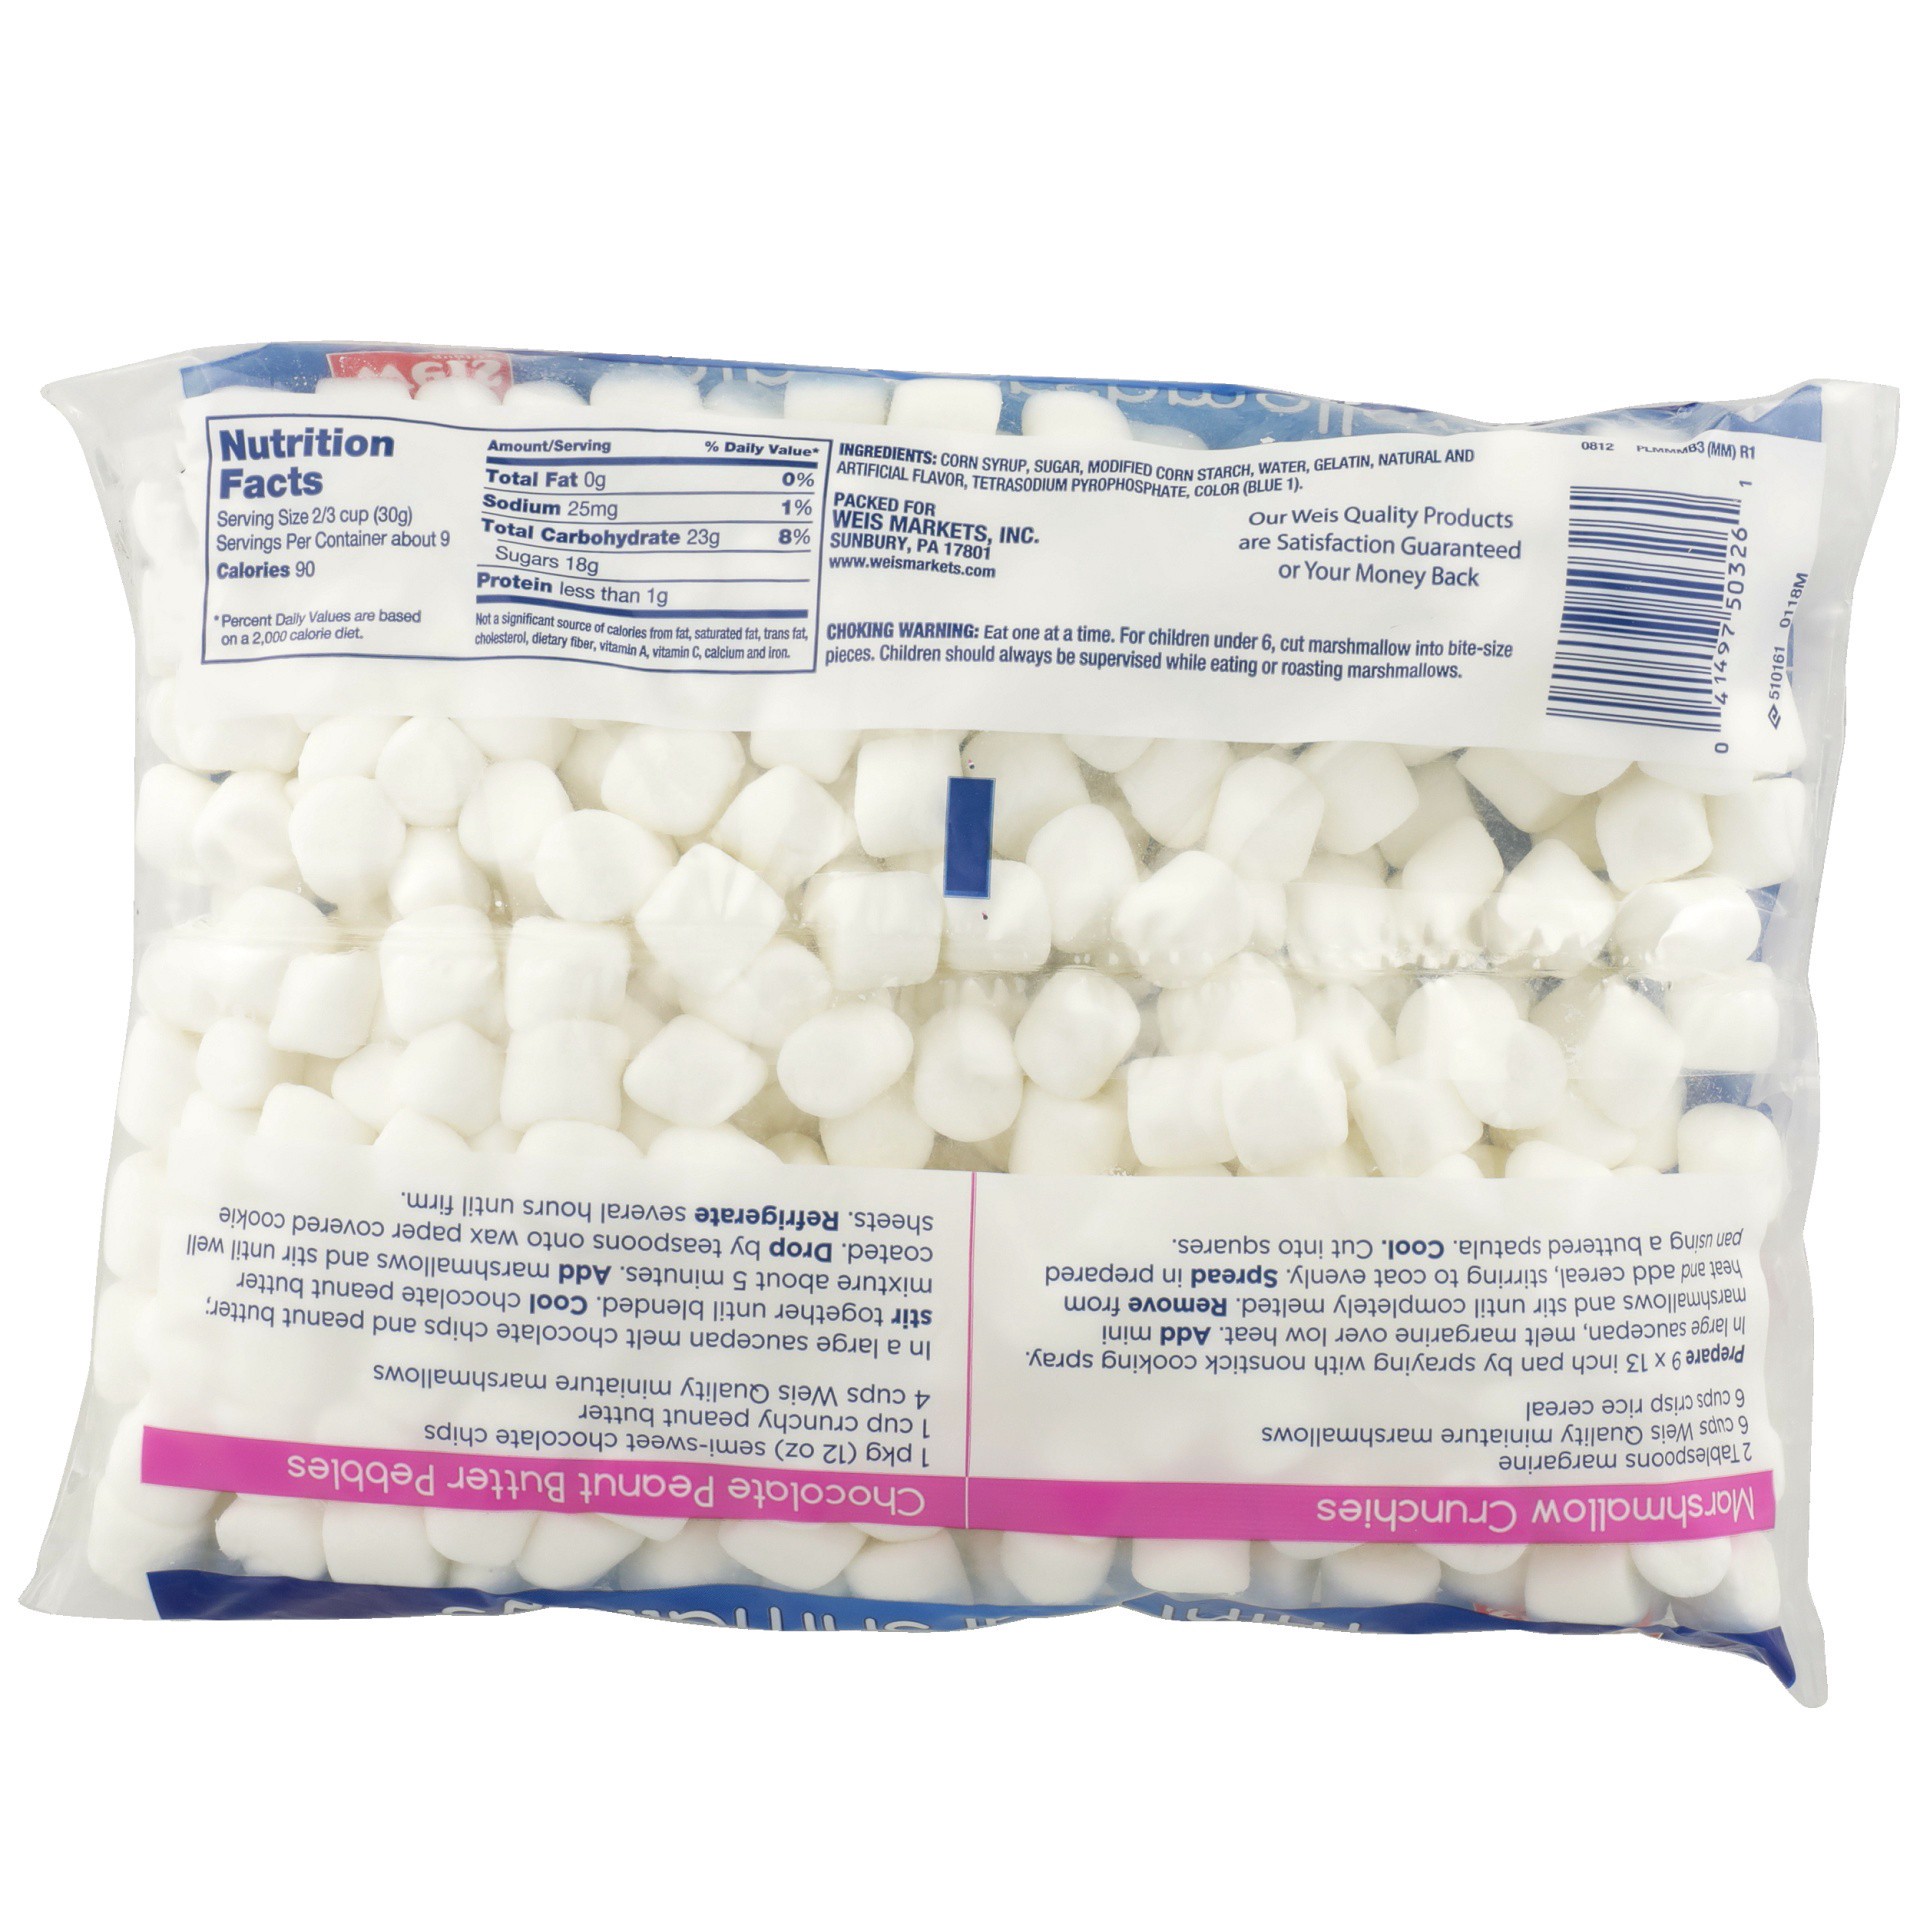 Weis Quality - Weis Quality, Mini Marshmallows (10 oz), Shop